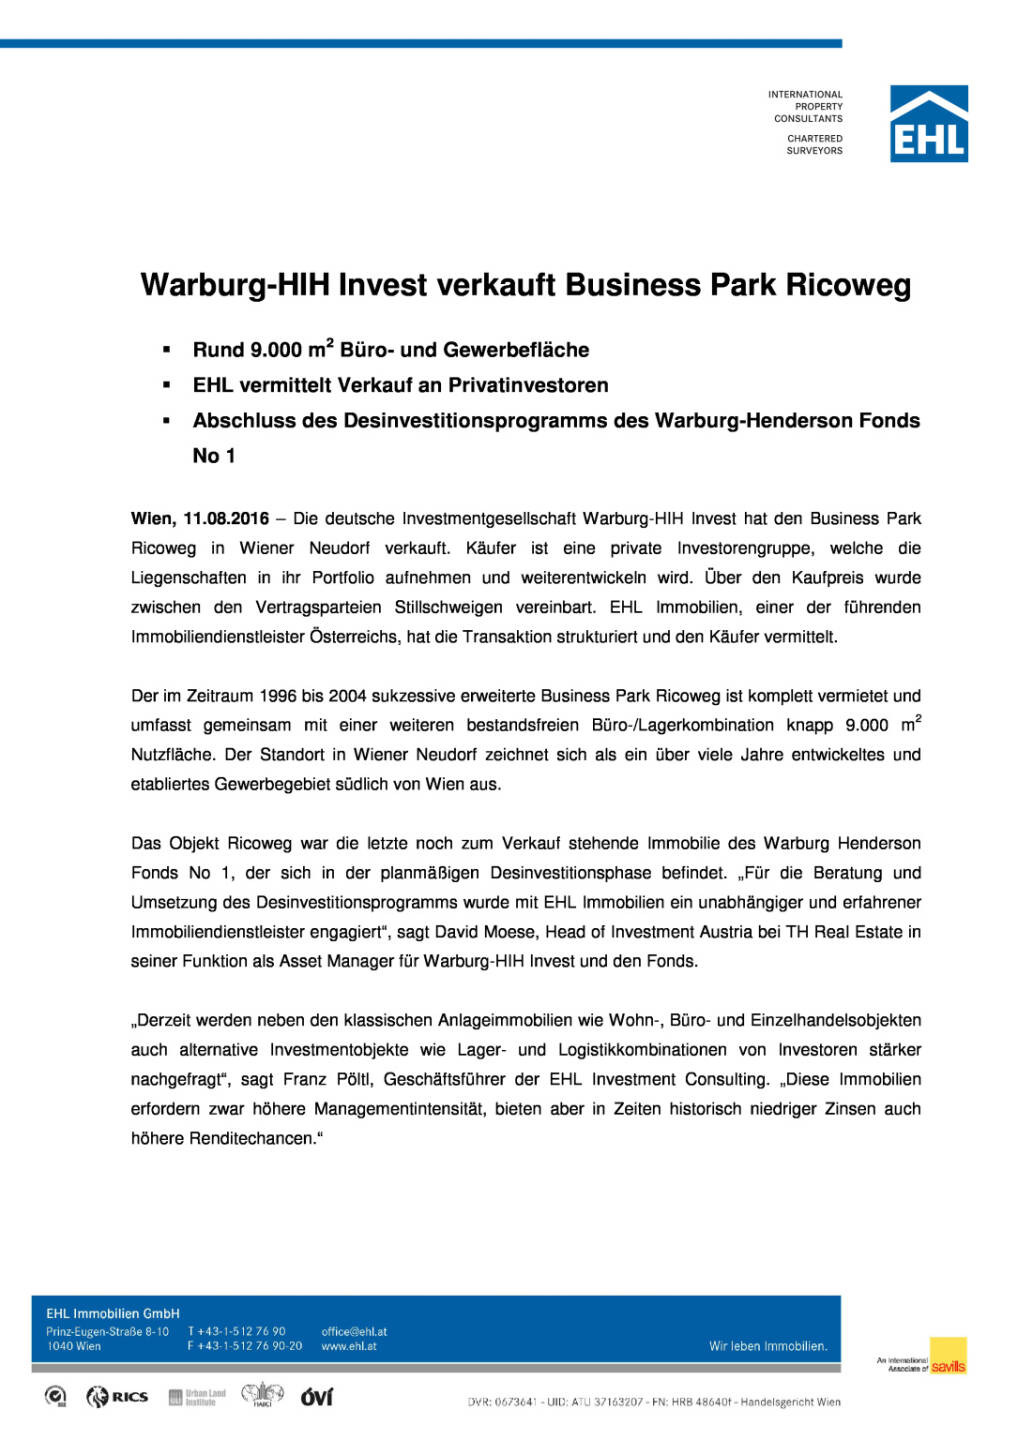 EHL Immobilien: Warburg-HIH Invest verkauft Businesspark Ricoweg, Seite 1/2, komplettes Dokument unter http://boerse-social.com/static/uploads/file_1611_ehl_immobilien_warburg-hih_invest_verkauft_businesspark_ricoweg.pdf